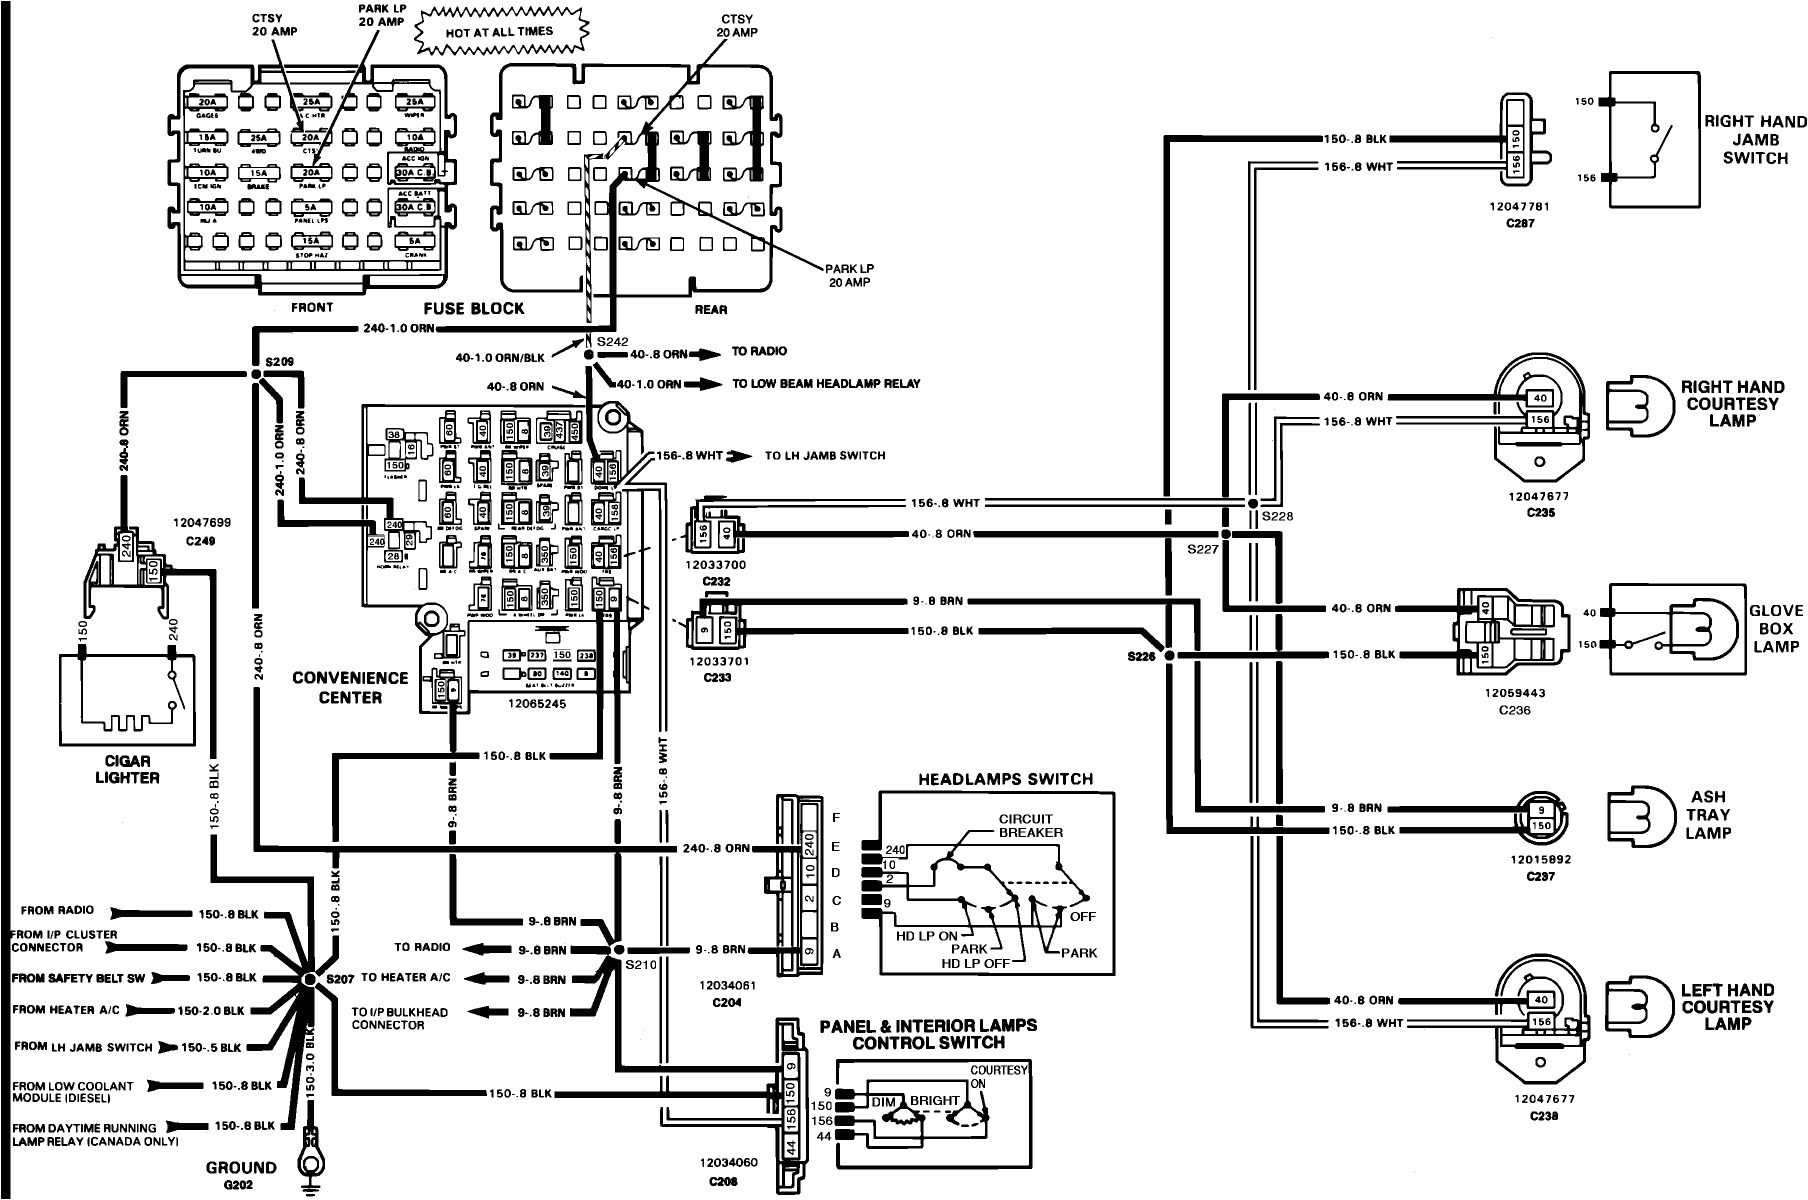 93 gm wiring diagram wiring diagram load 1993 gmc sierra ignition wiring diagram 1993 chevy truck